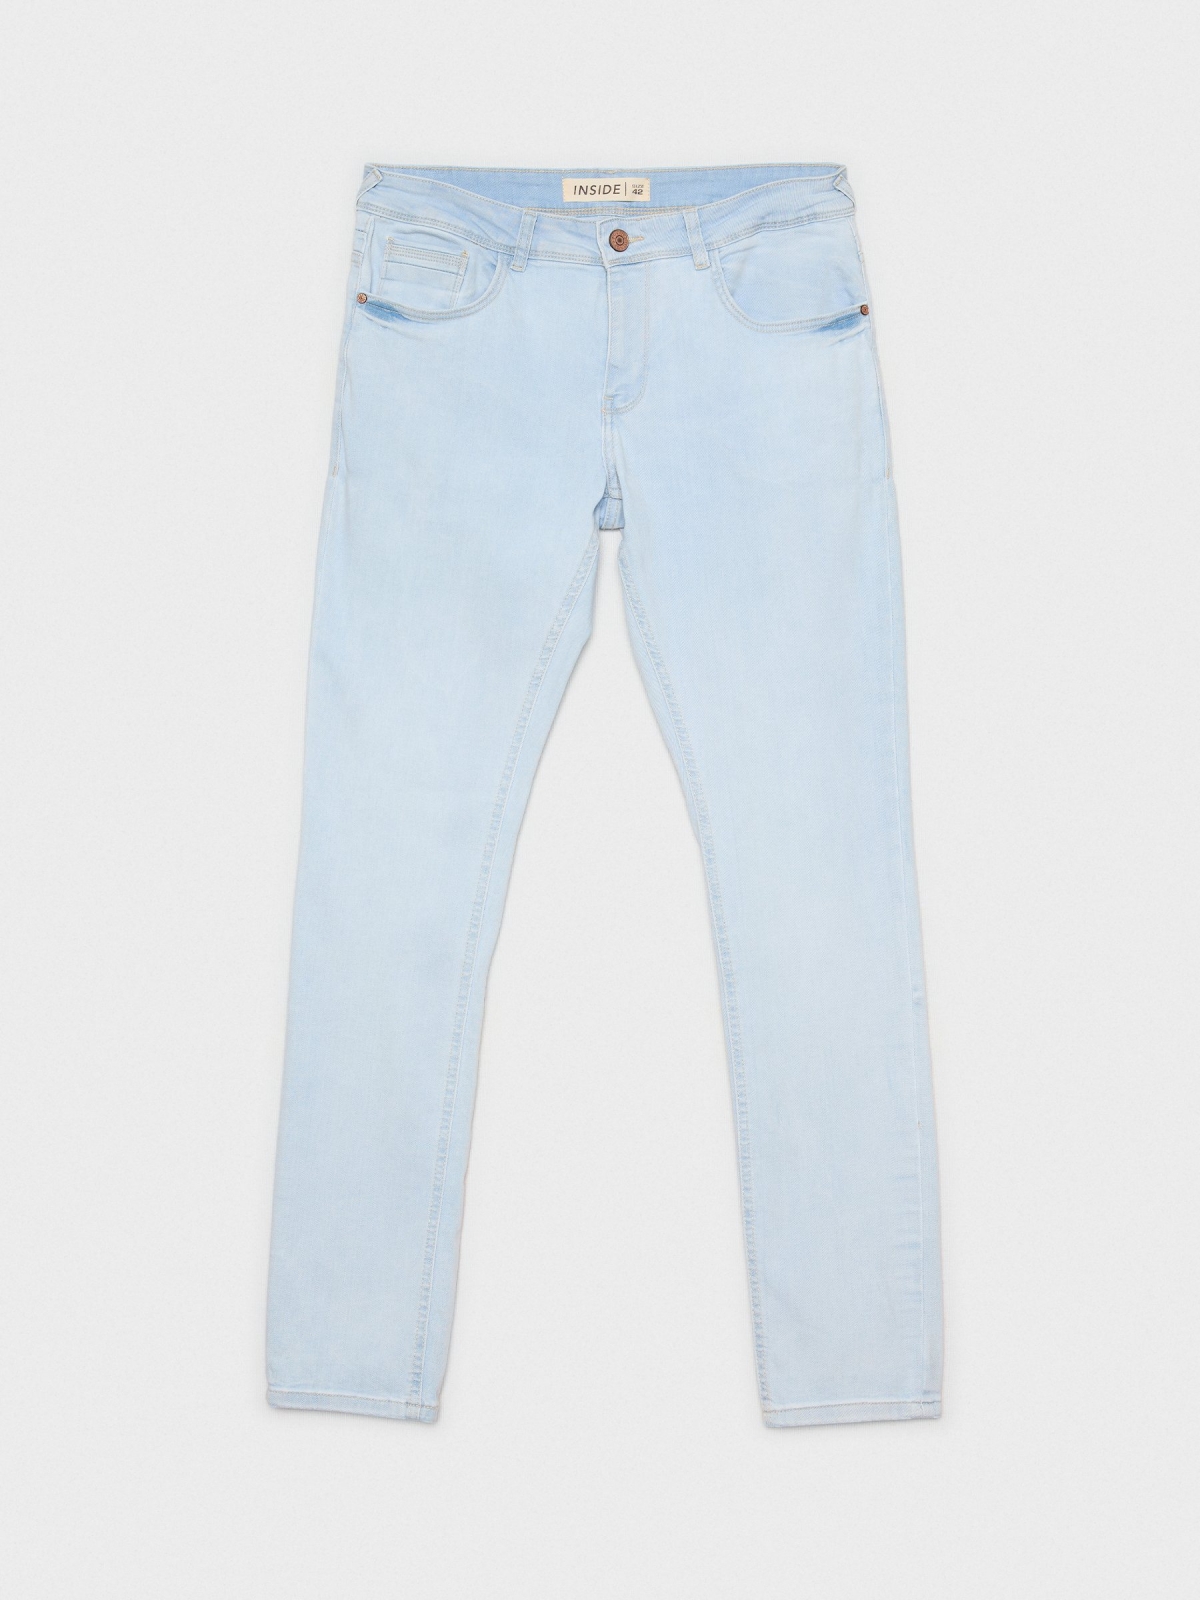  Jeans slim branqueado azul/branco